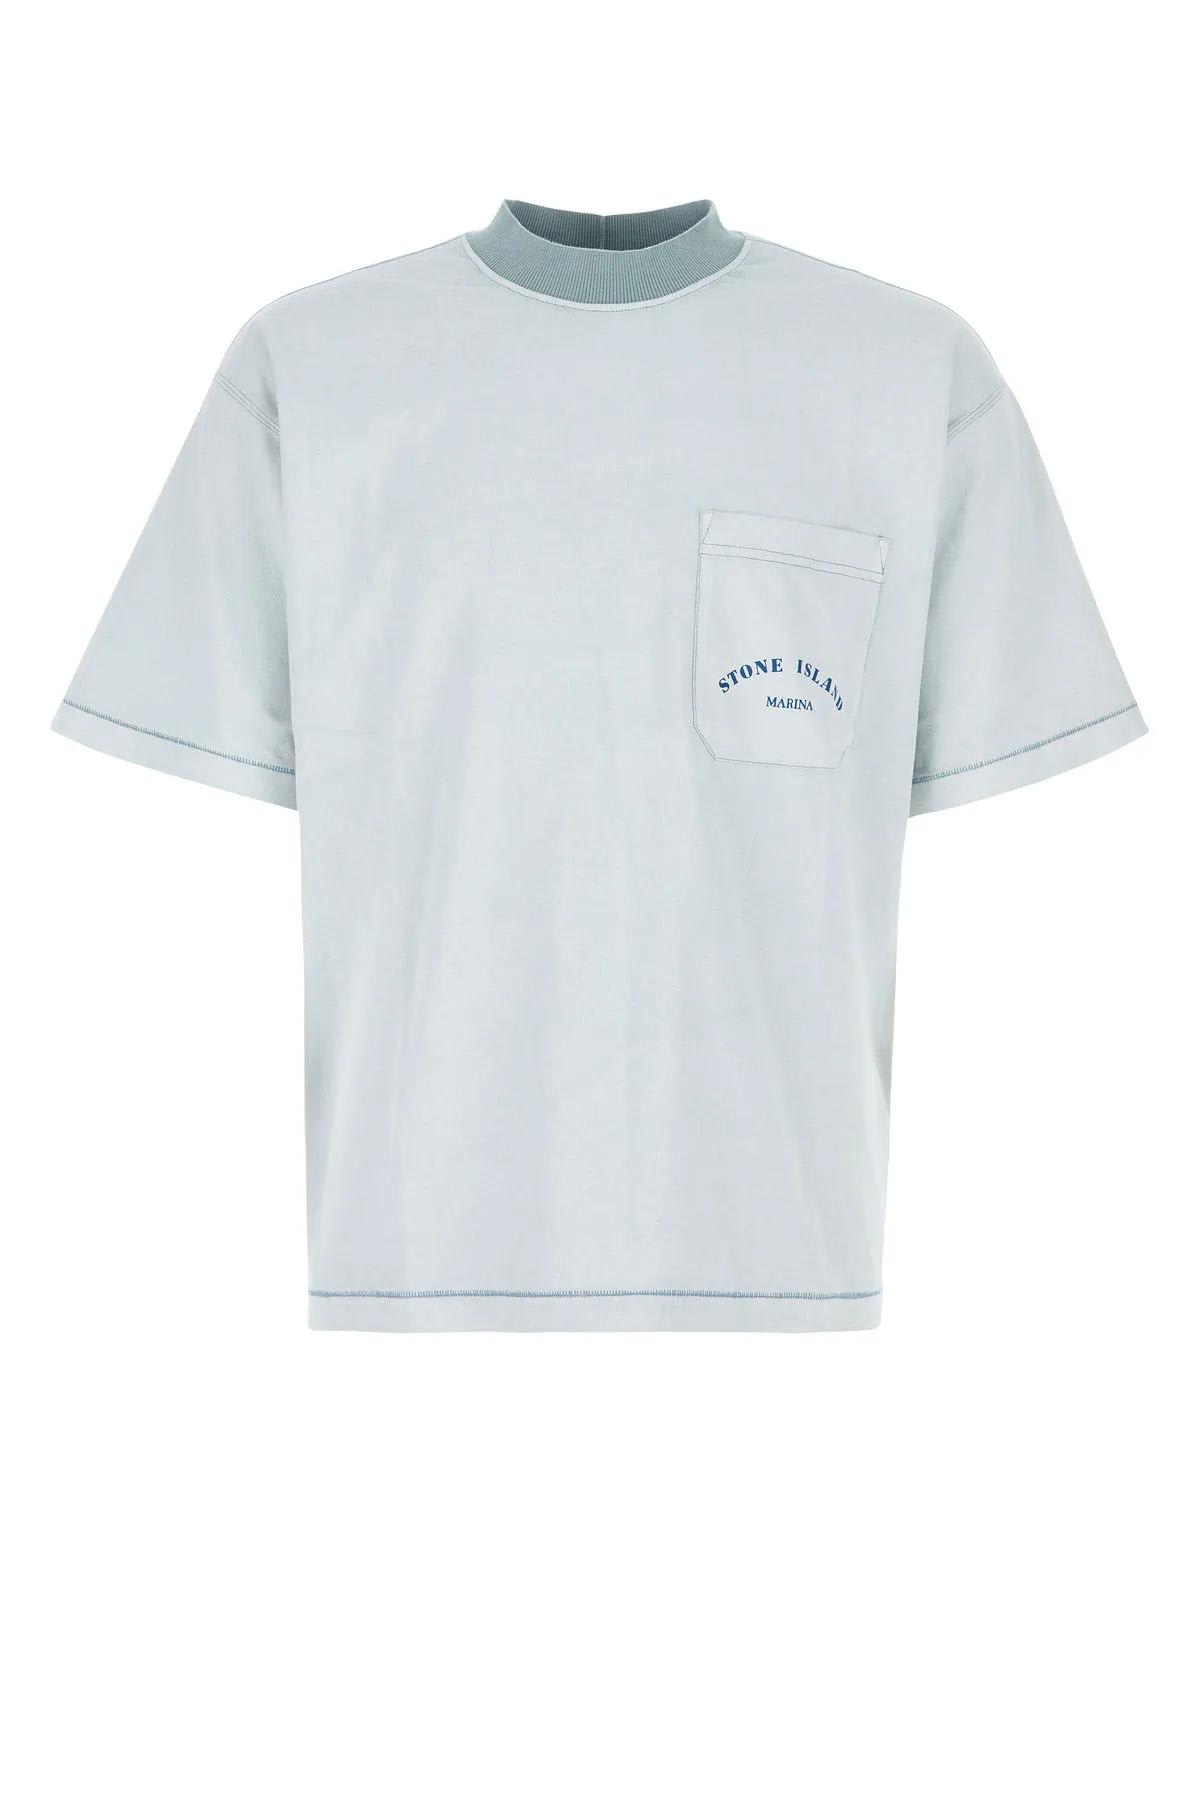 Stone Island Light-Blue Cotton T-Shirt